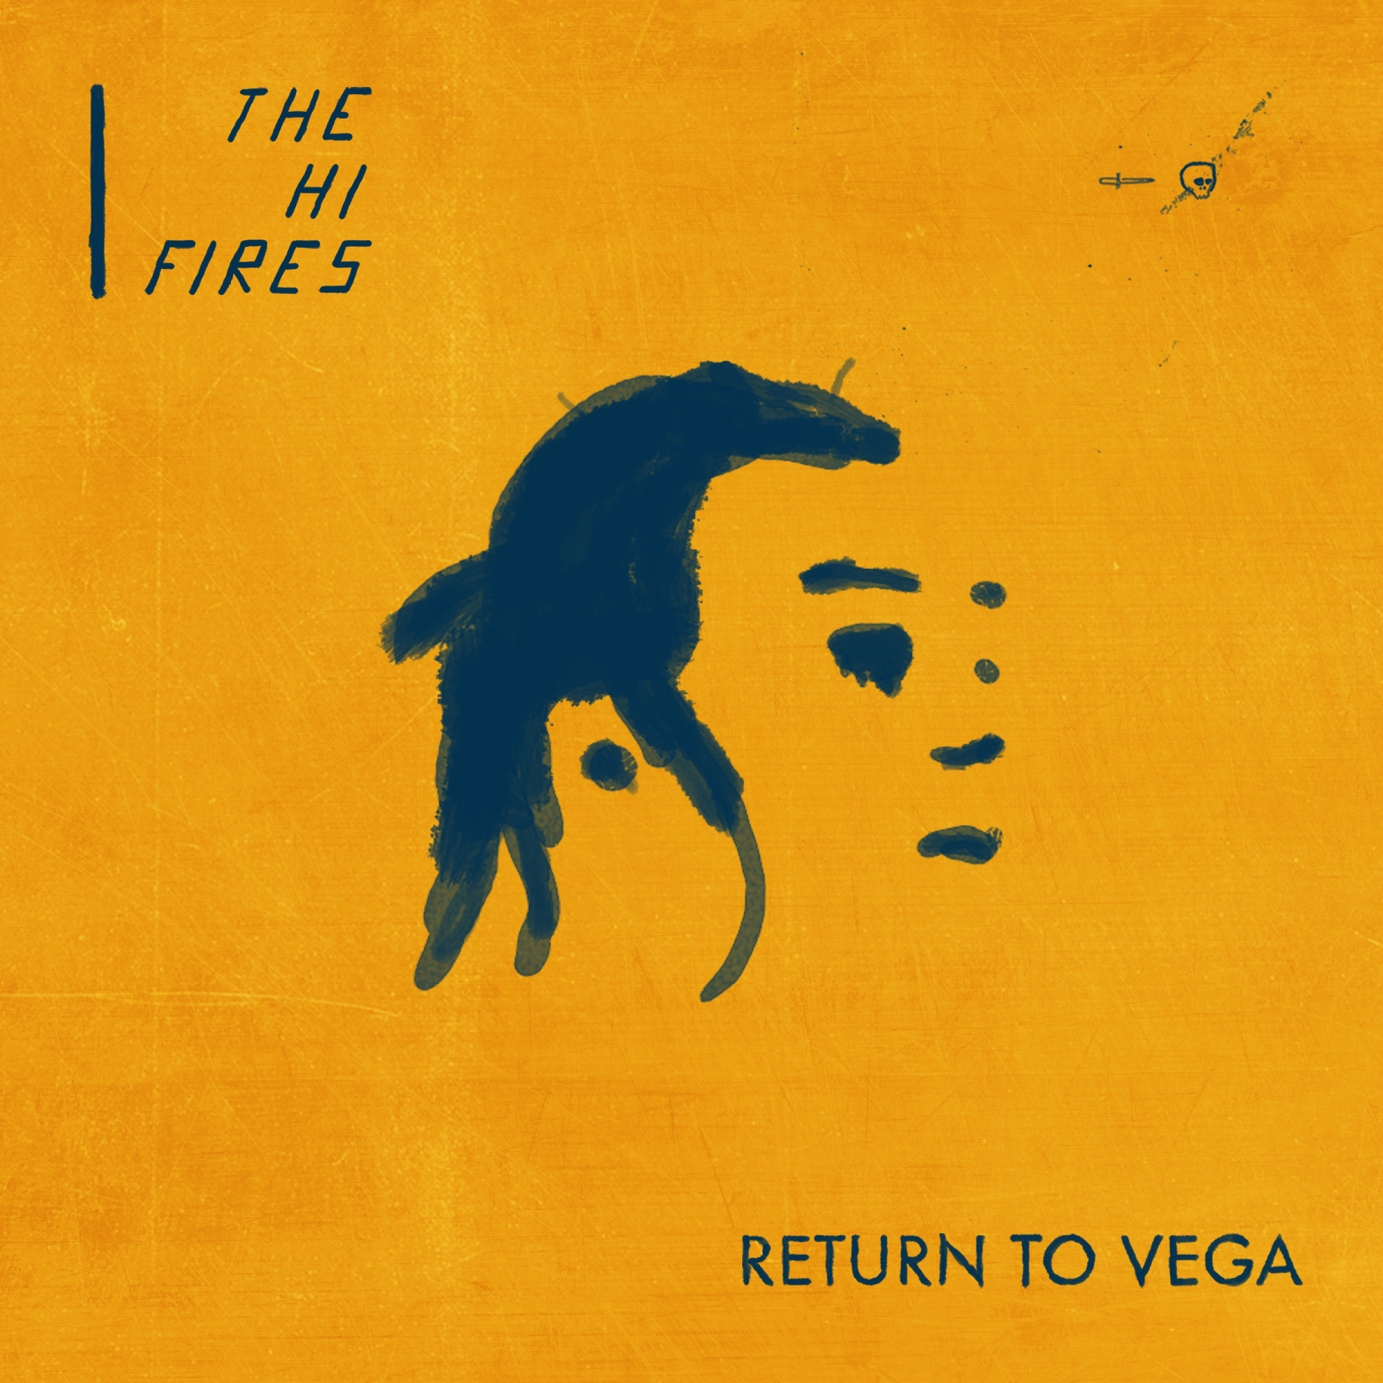 The-Hi-Fires-cover-art-12'-edit.jpg